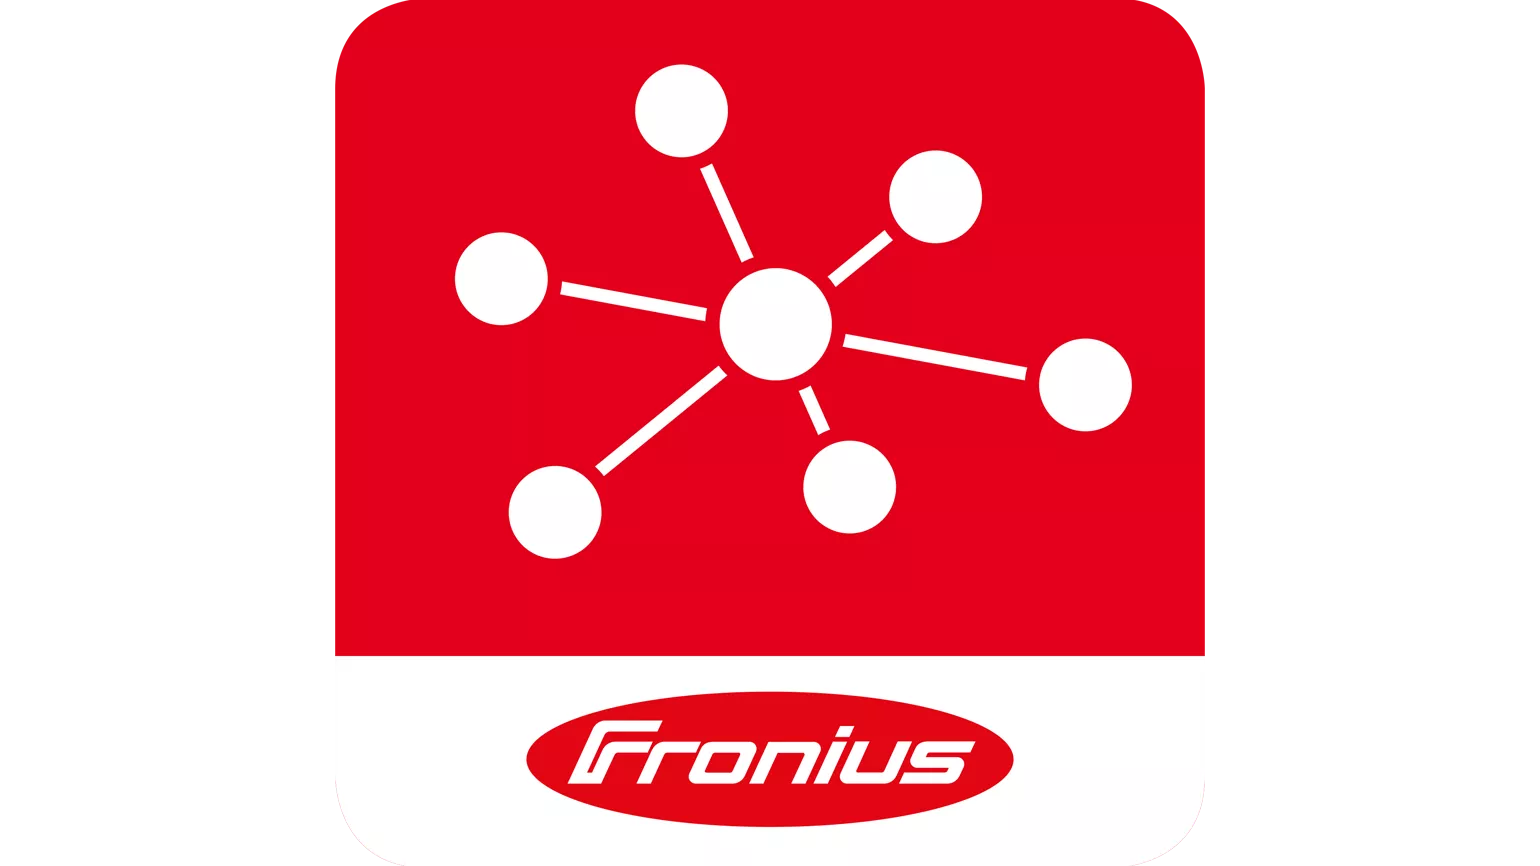 The Fronius welding dictionary